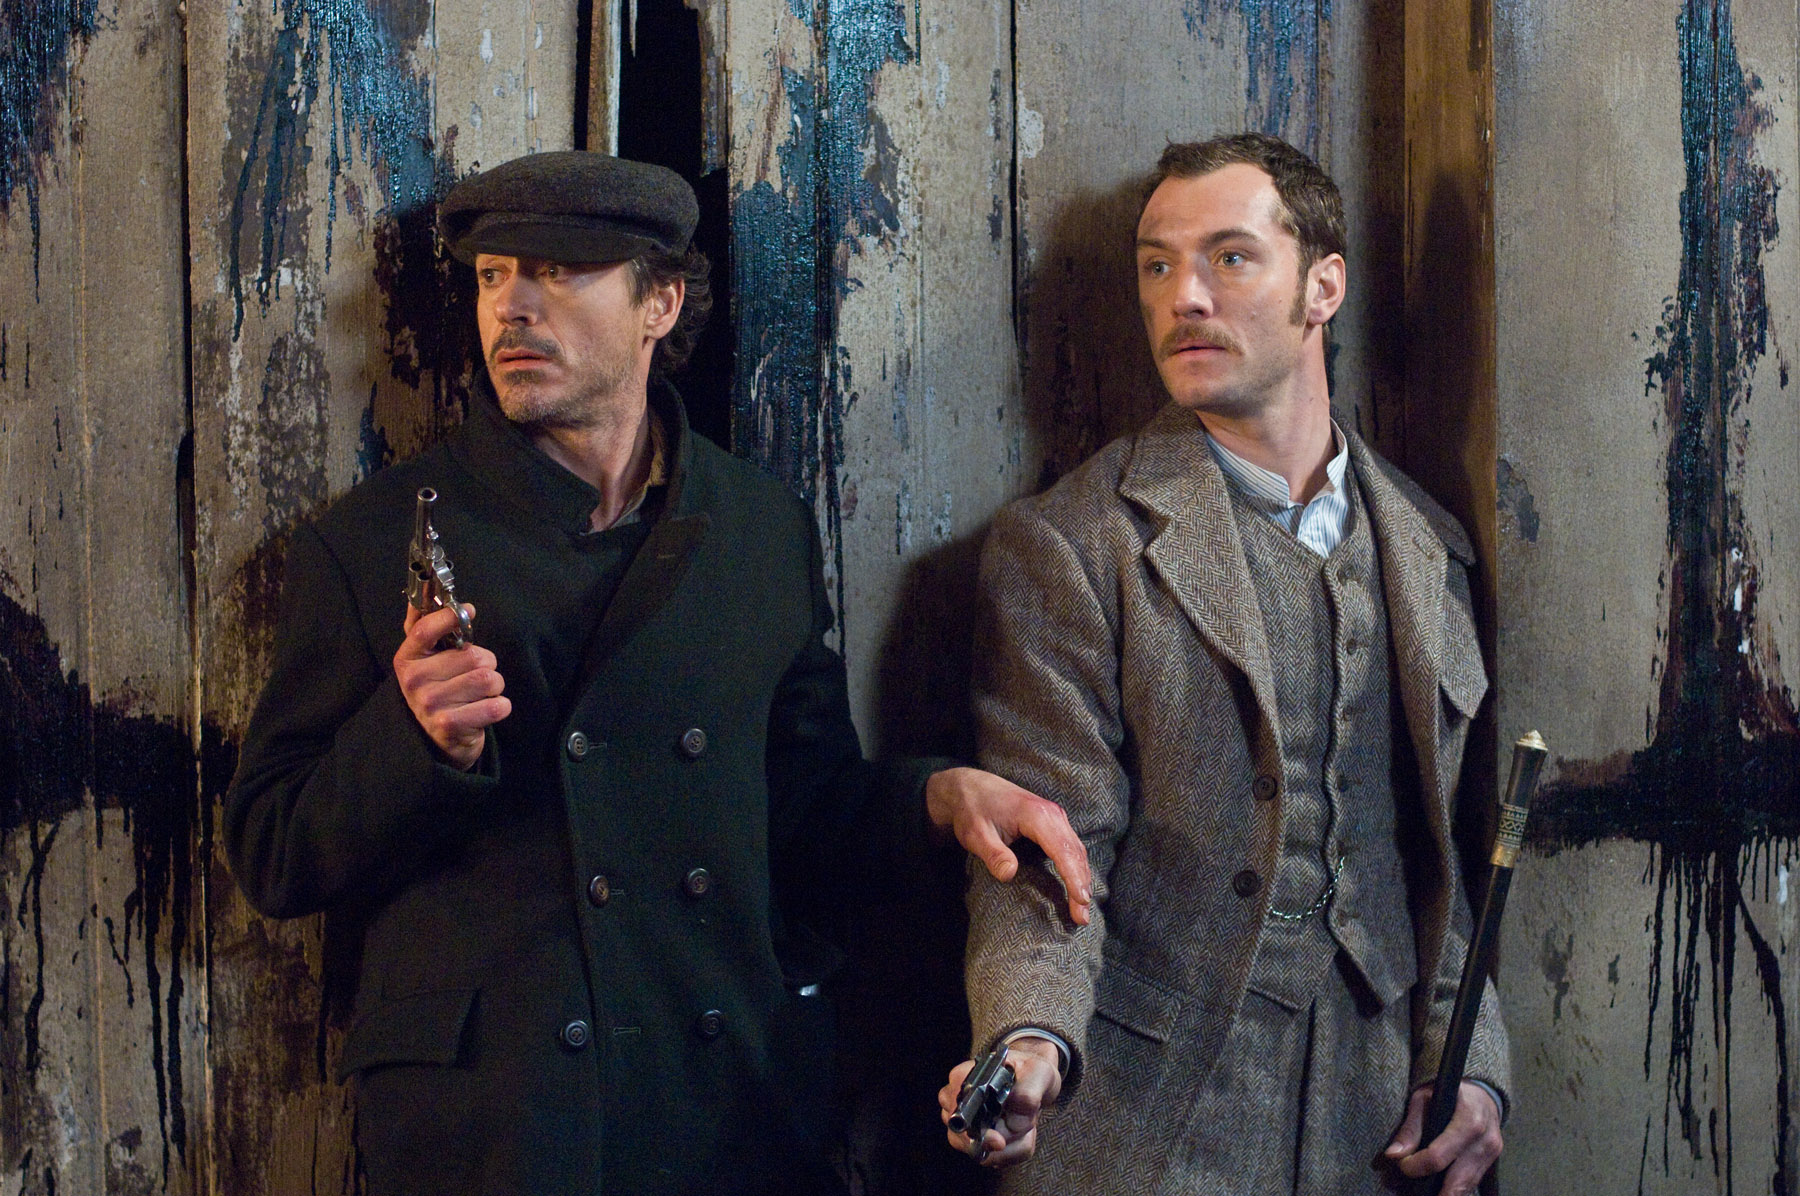 Who was Sherlock Holmes' archenemy?